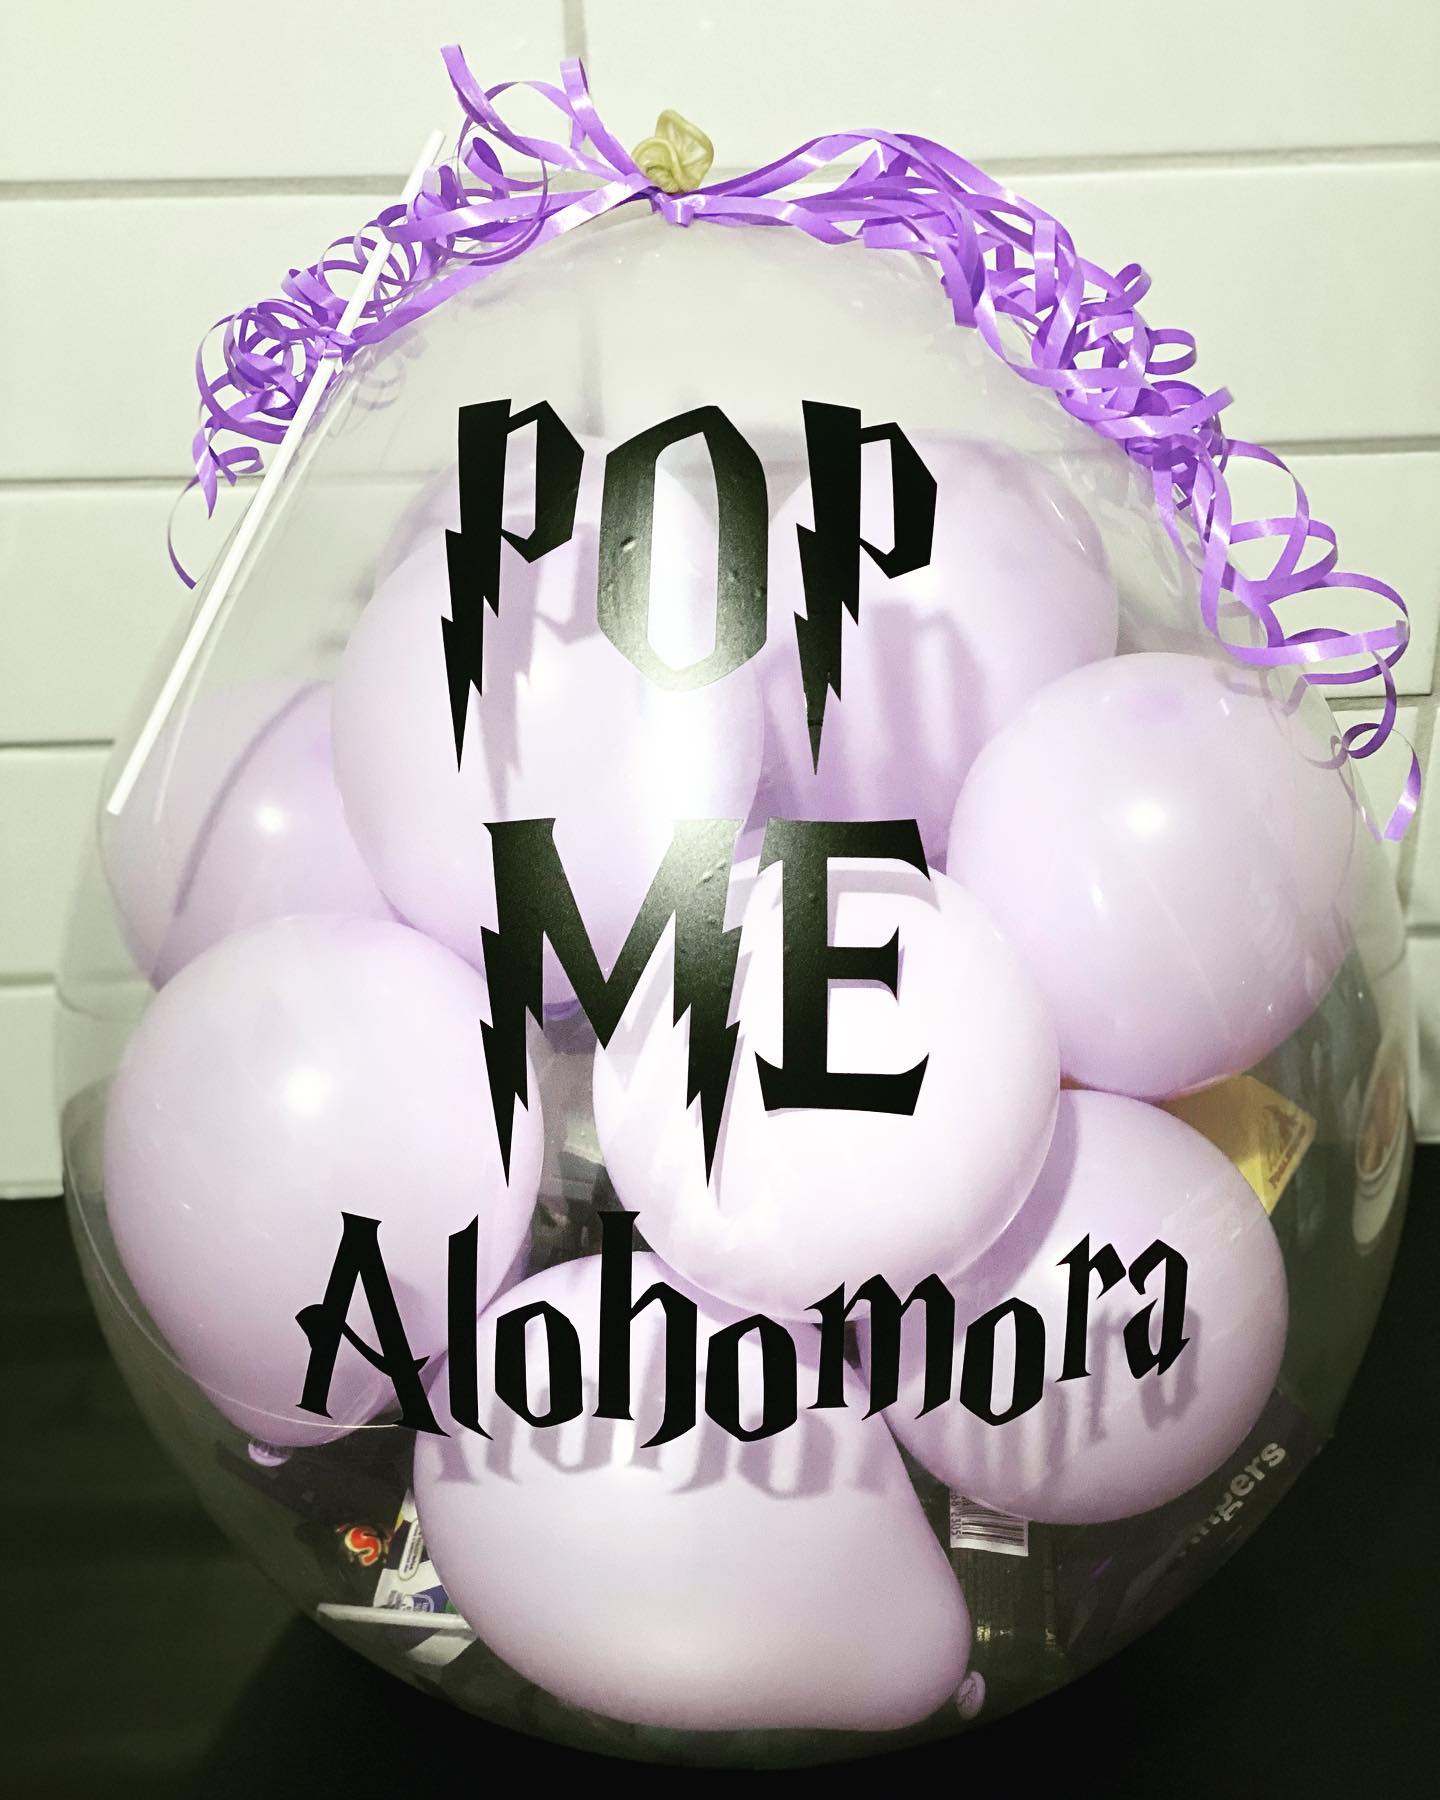 Pop Me - Small lolly/choc Balloon